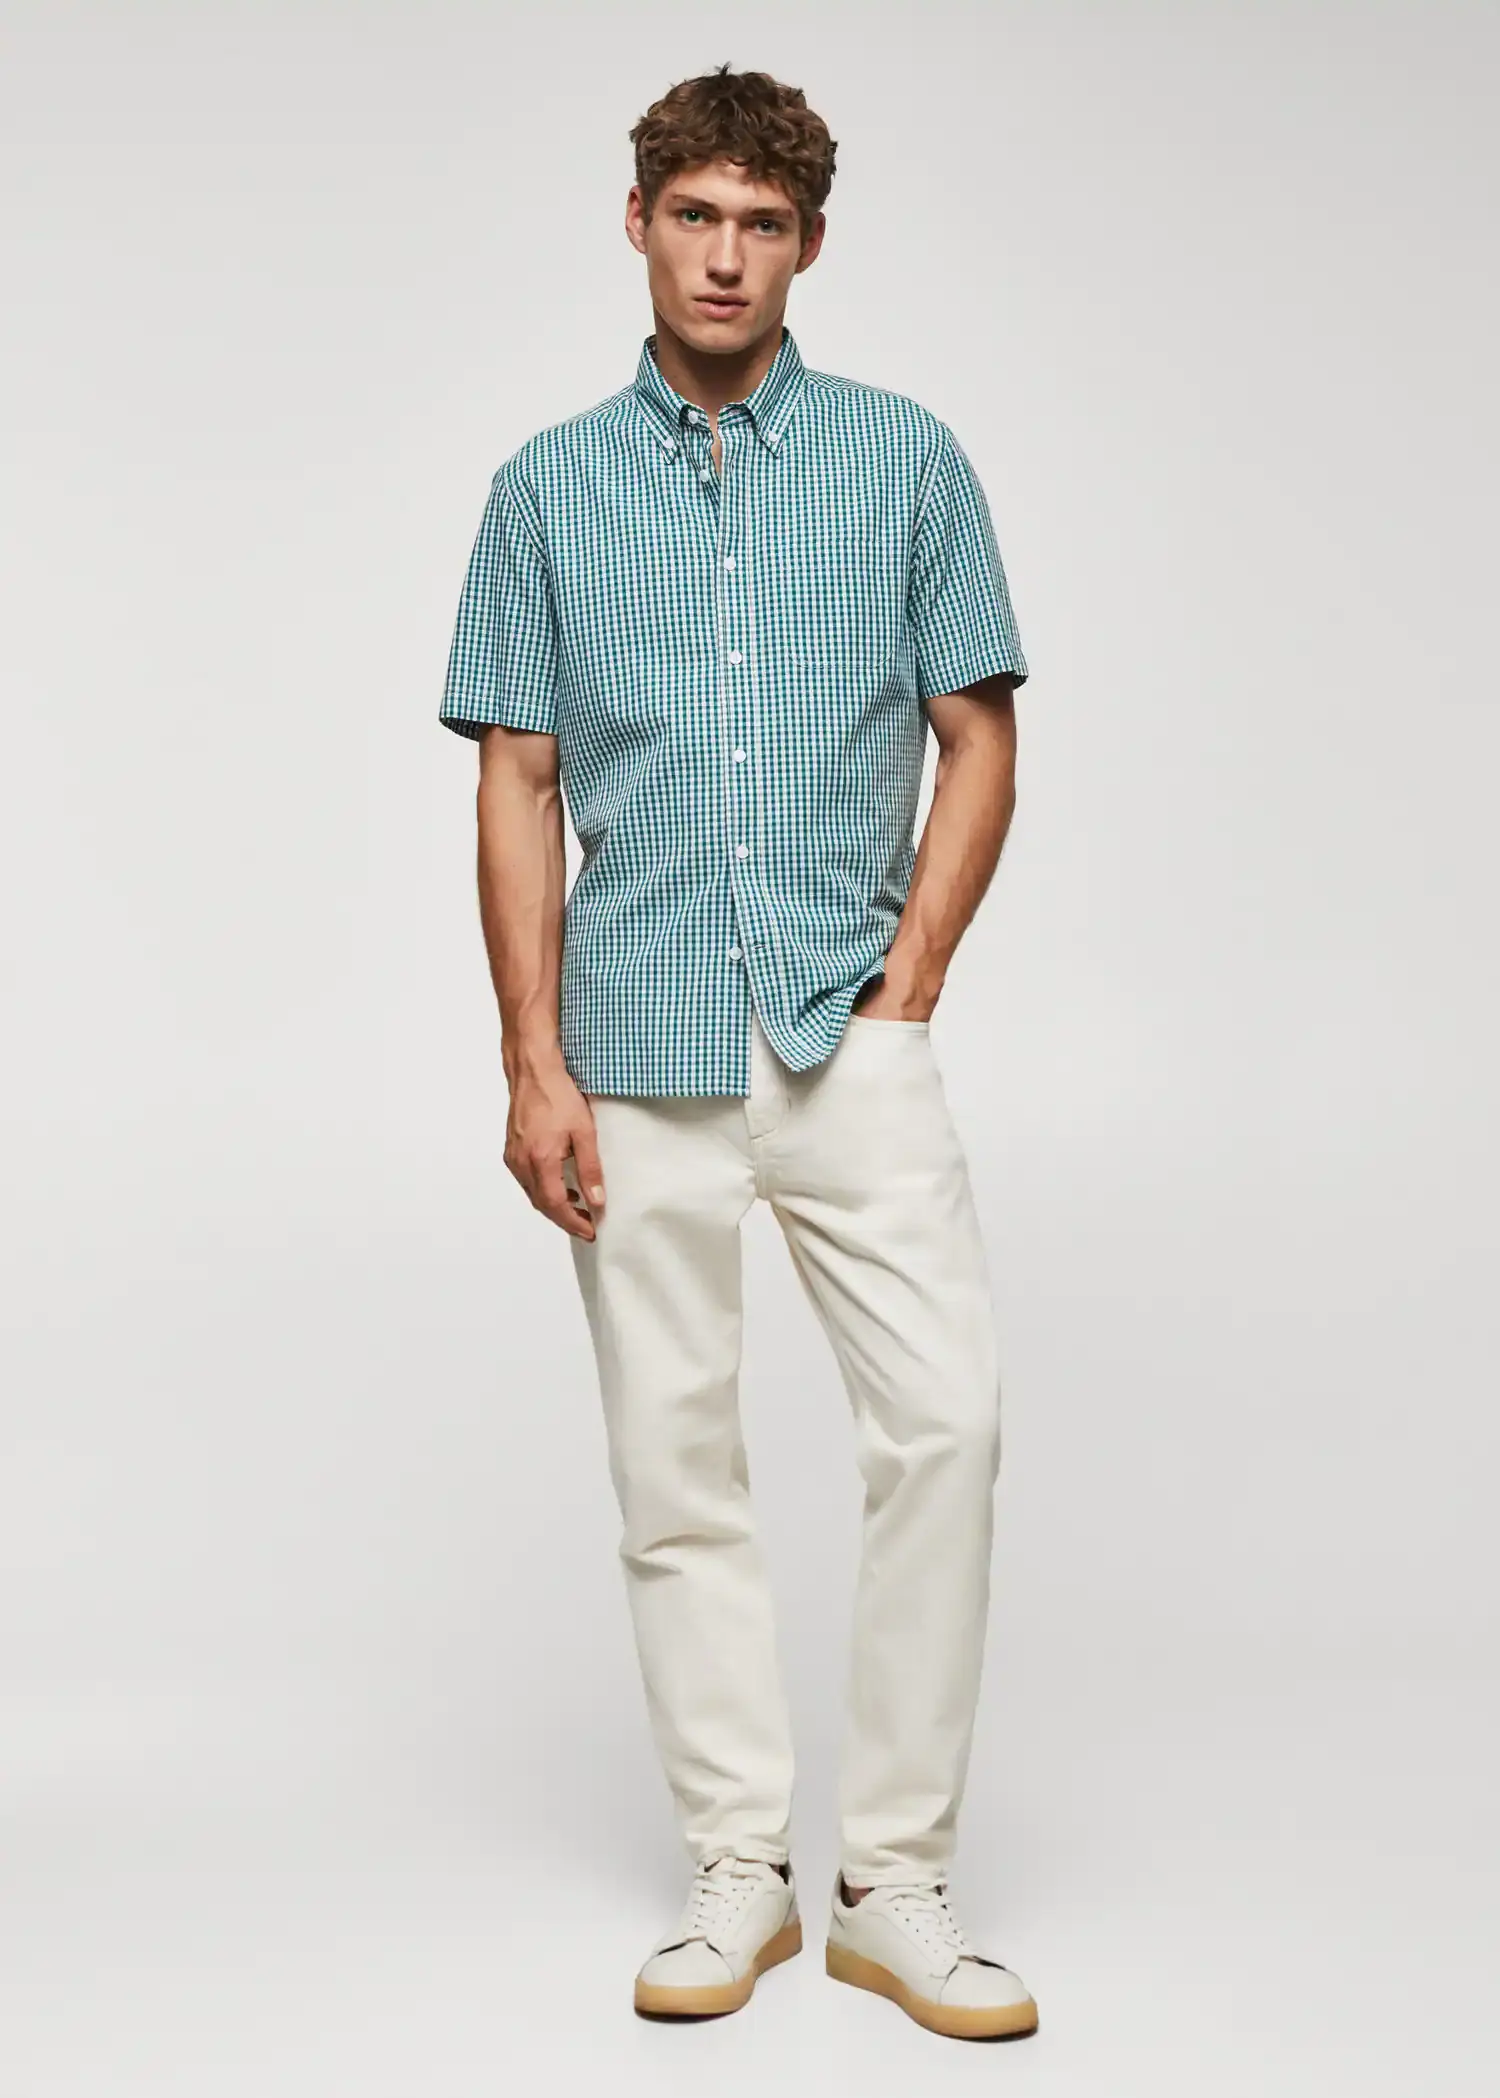 Mango 100% cotton short-sleeved printed shirt. 3